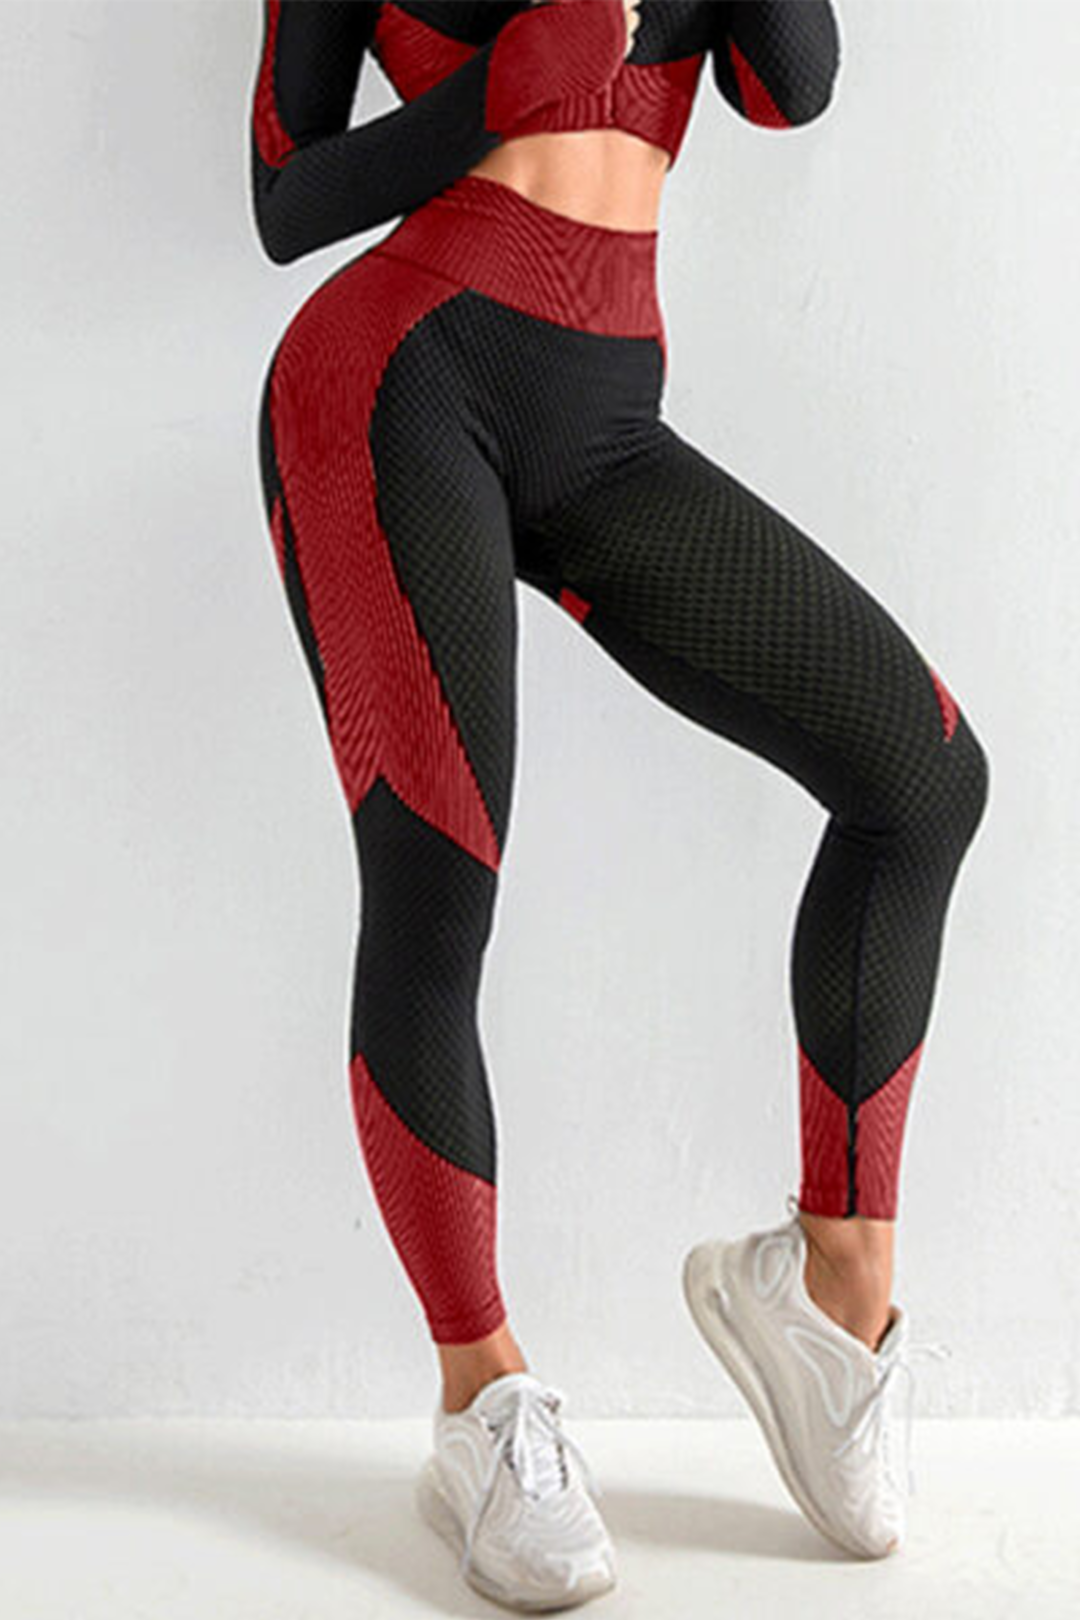 3 Pack] Leggings for Women Athletic Yoga Casual Lounge Pants